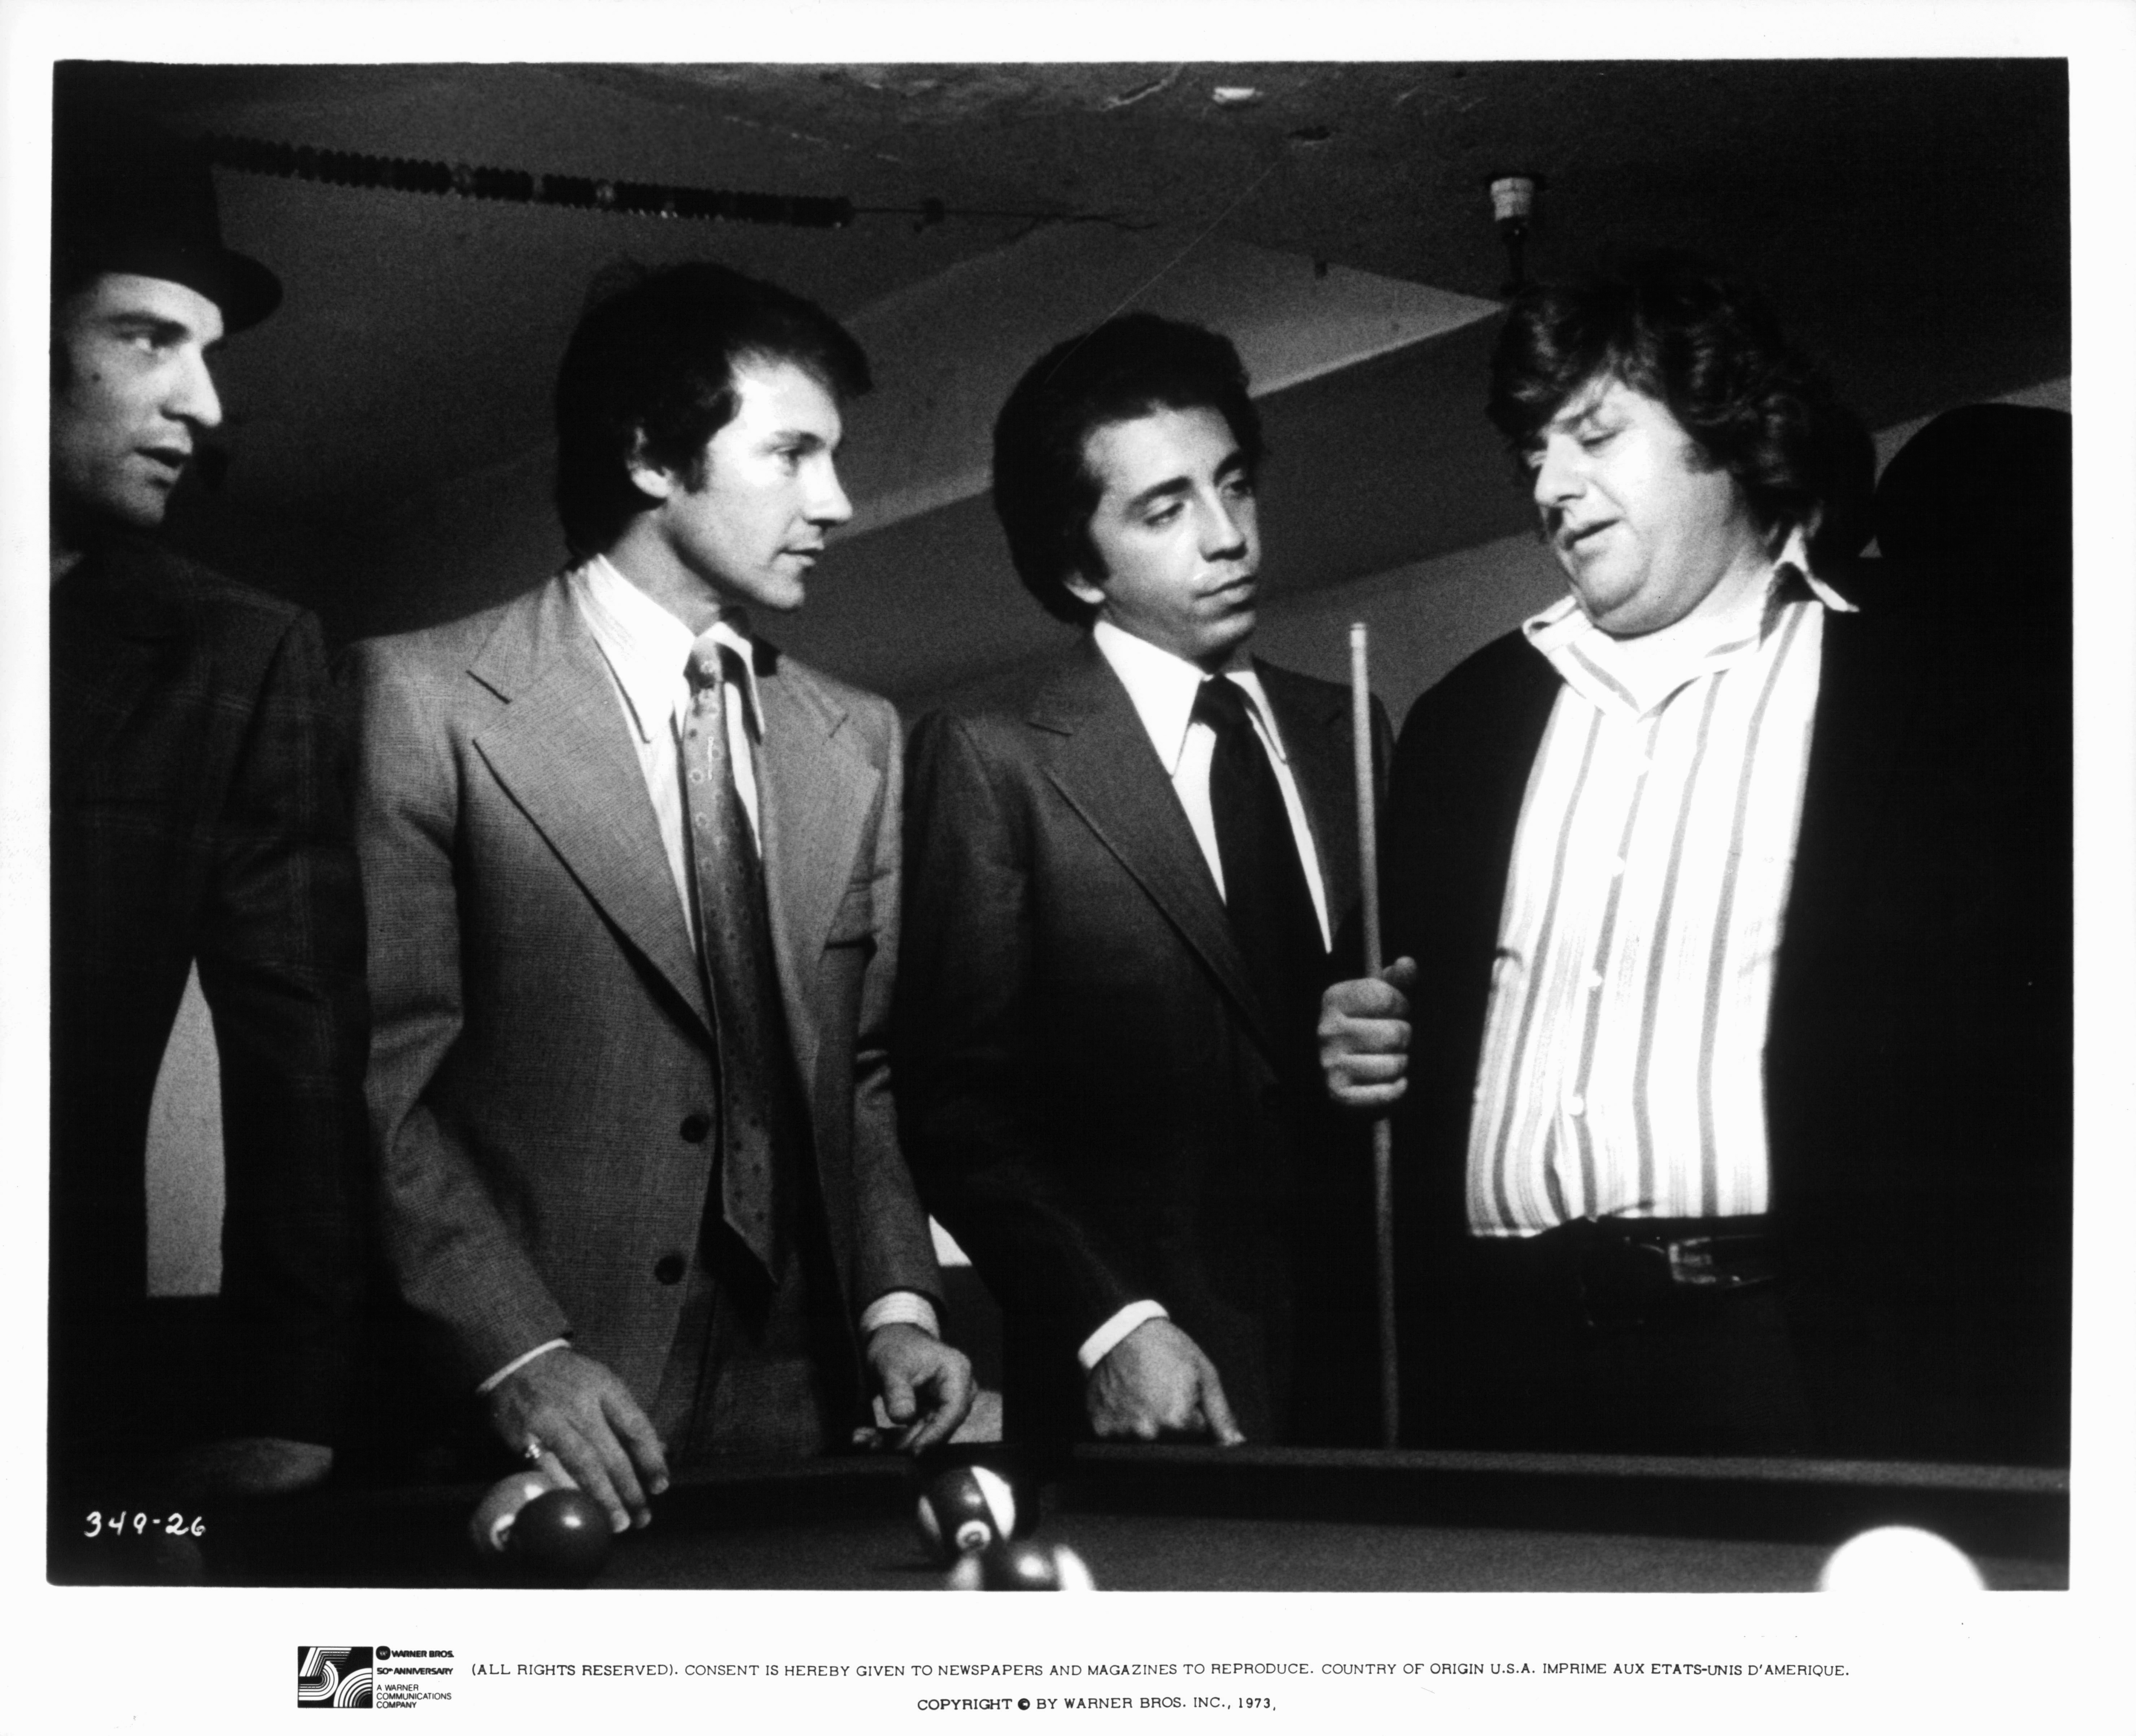 Still of Robert De Niro, Harvey Keitel and David Proval in Mean Streets (1973)